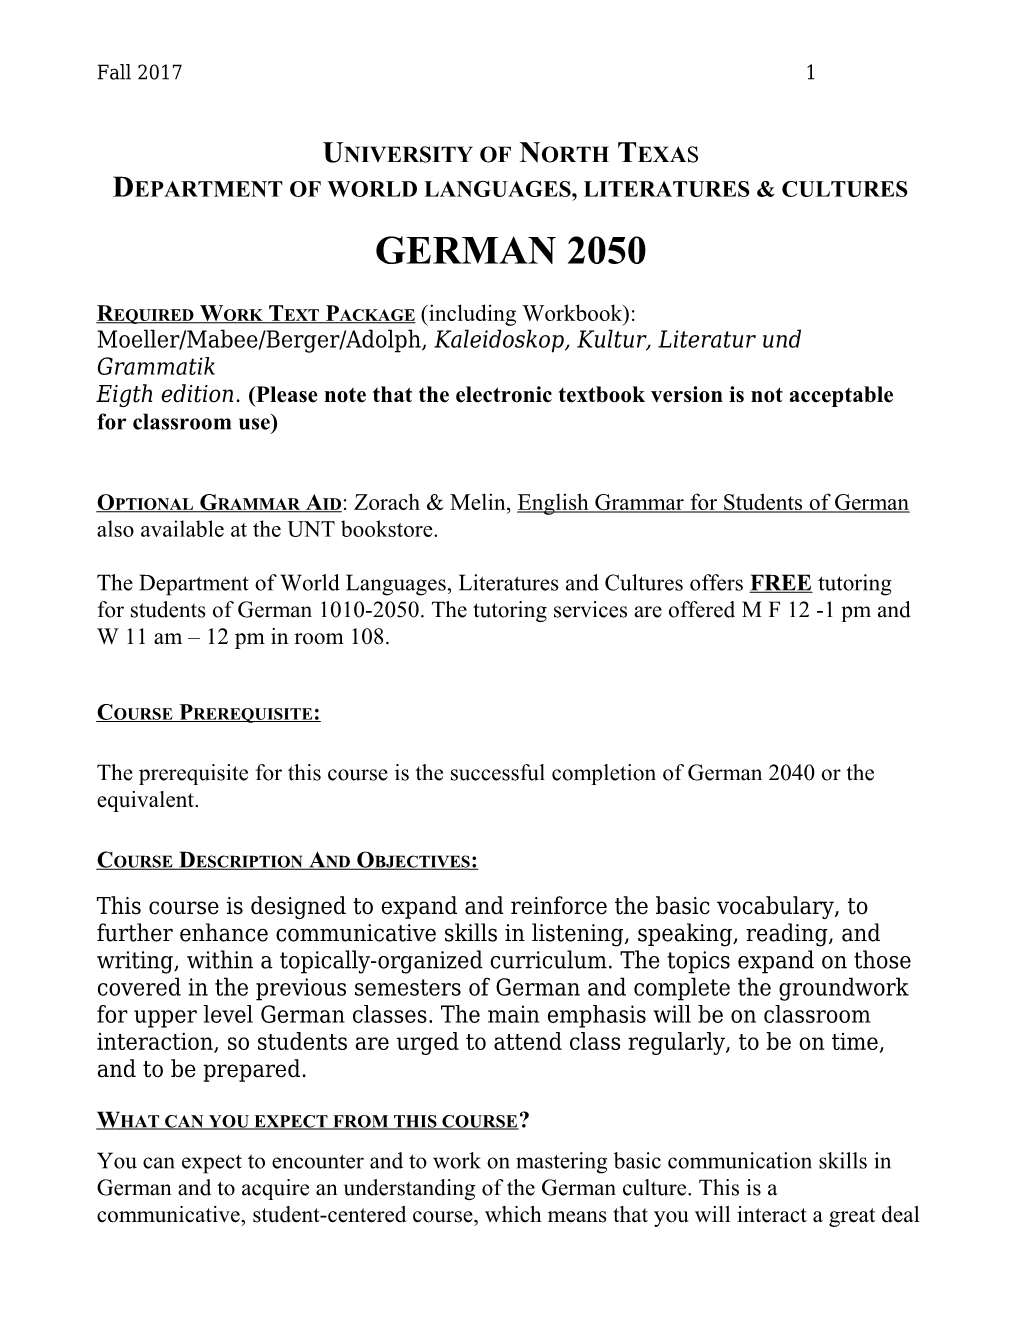 University of North Texa S Department of World Languages, Literatures & Cultures German 2050